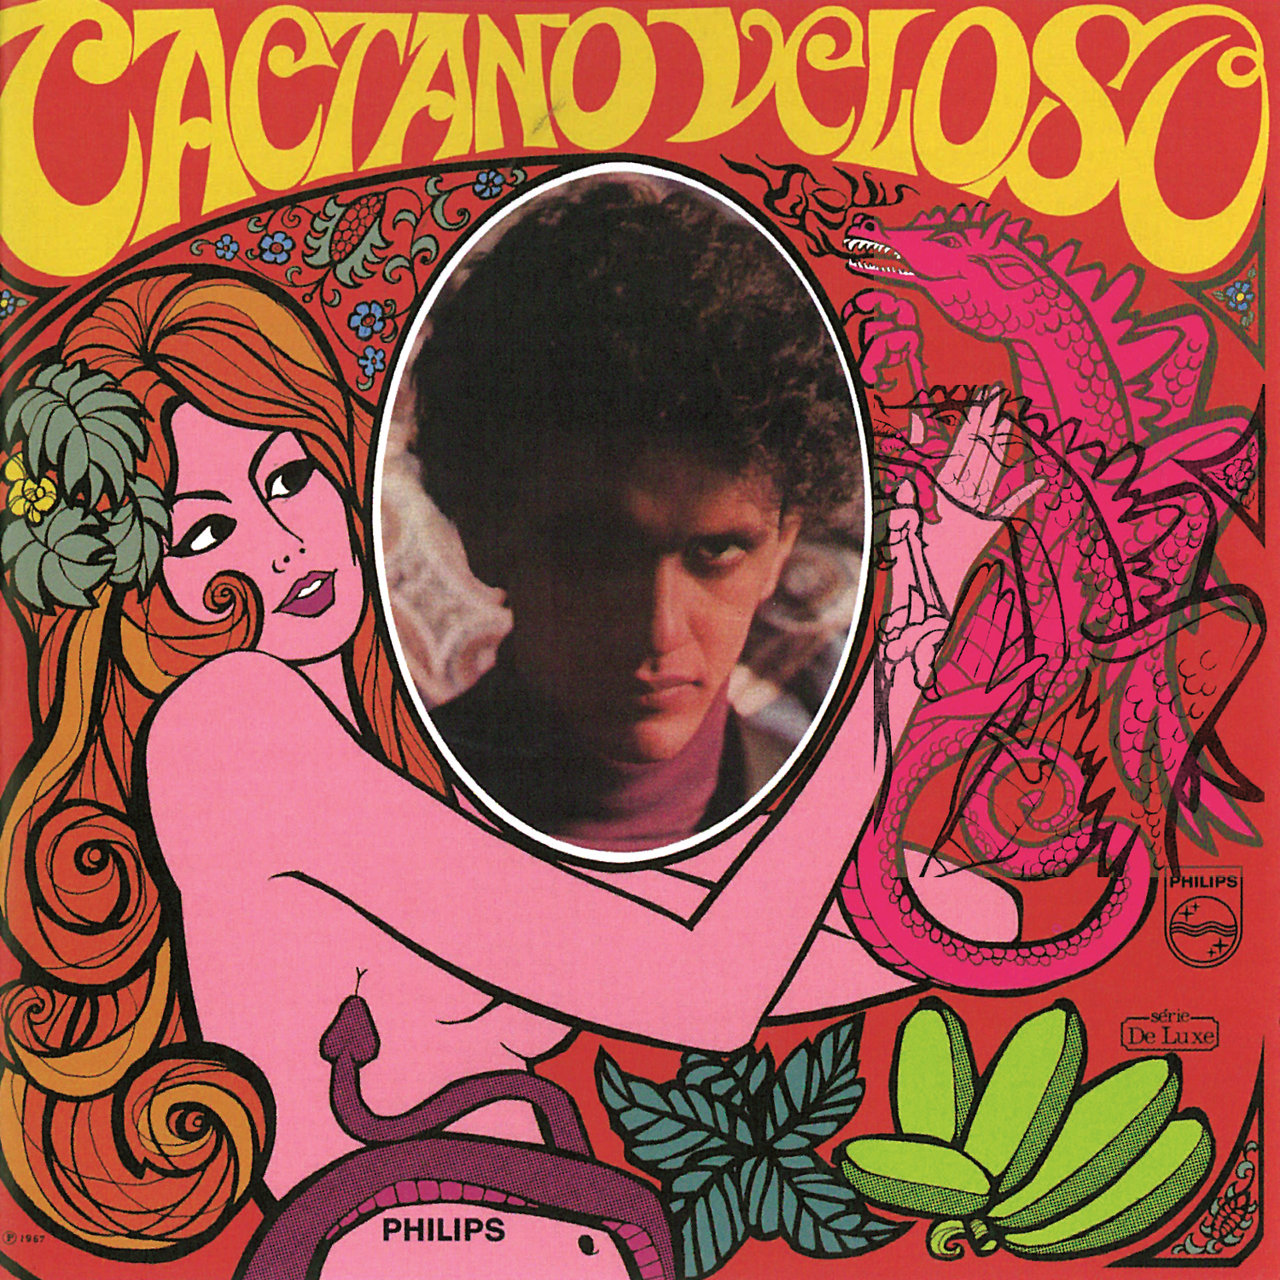 Caetano Veloso, 1968 (Reproduction)